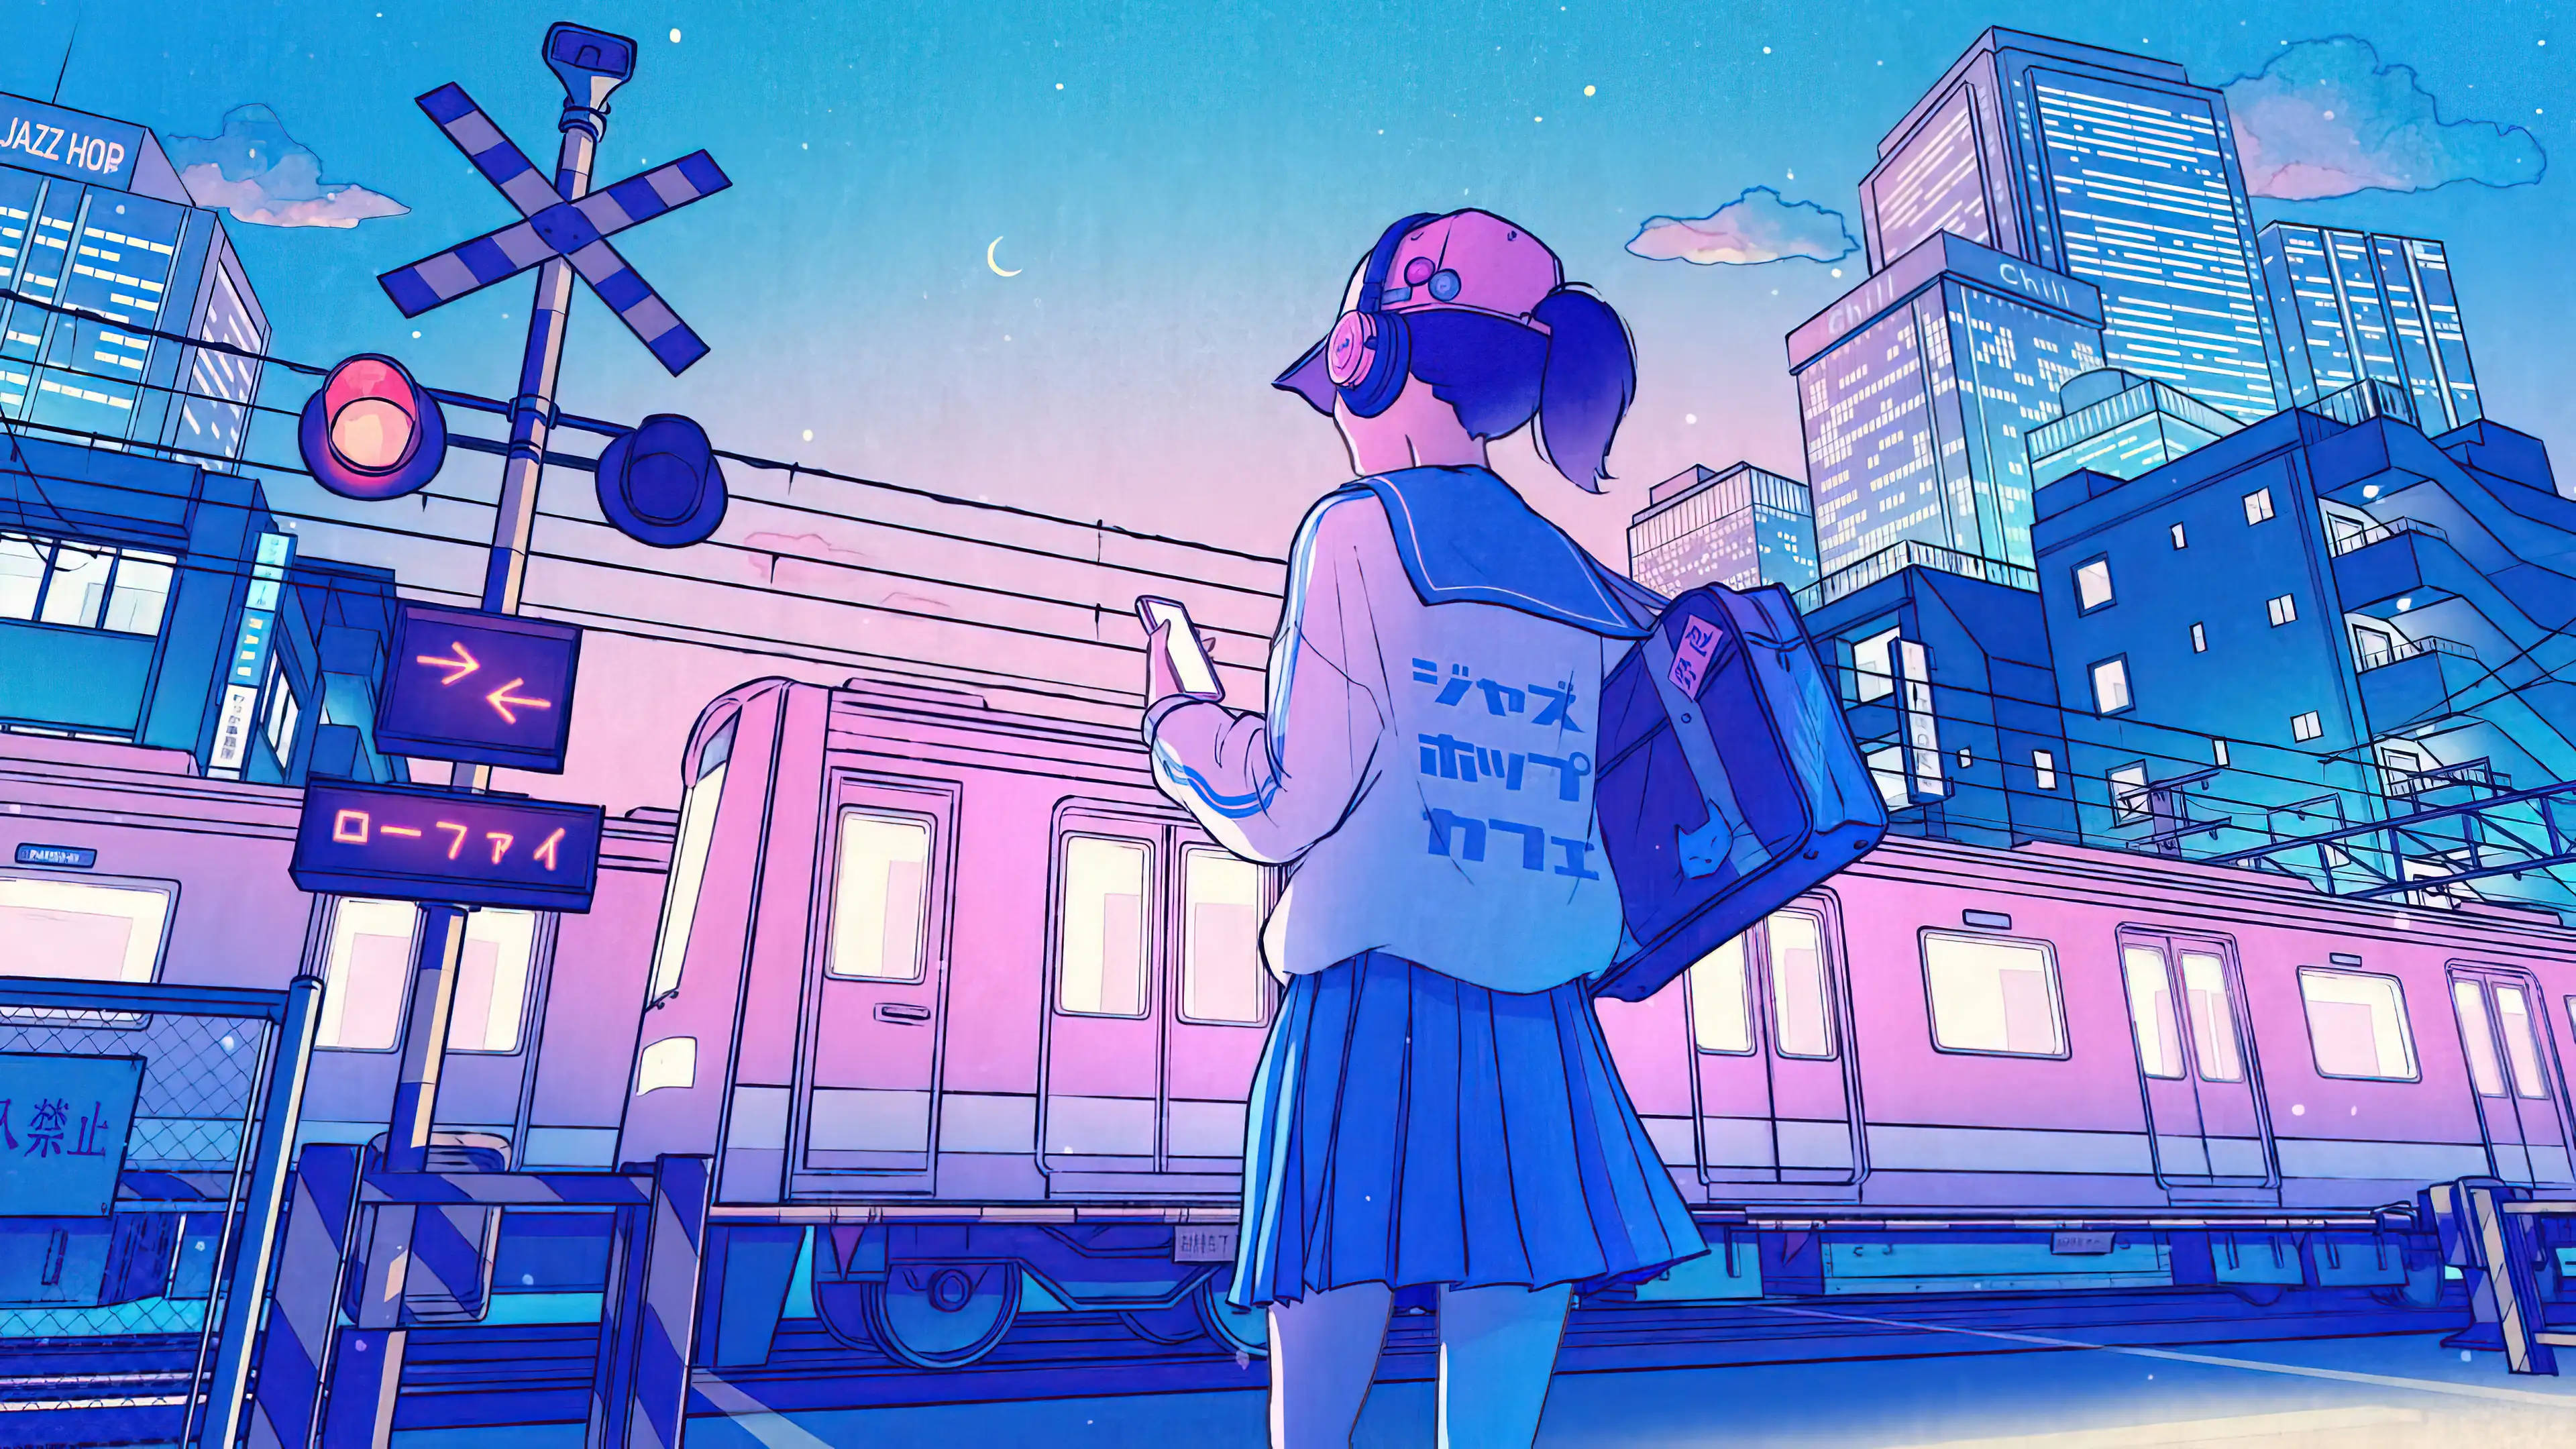 Download Neon Aesthetic Anime City Wallpaper 